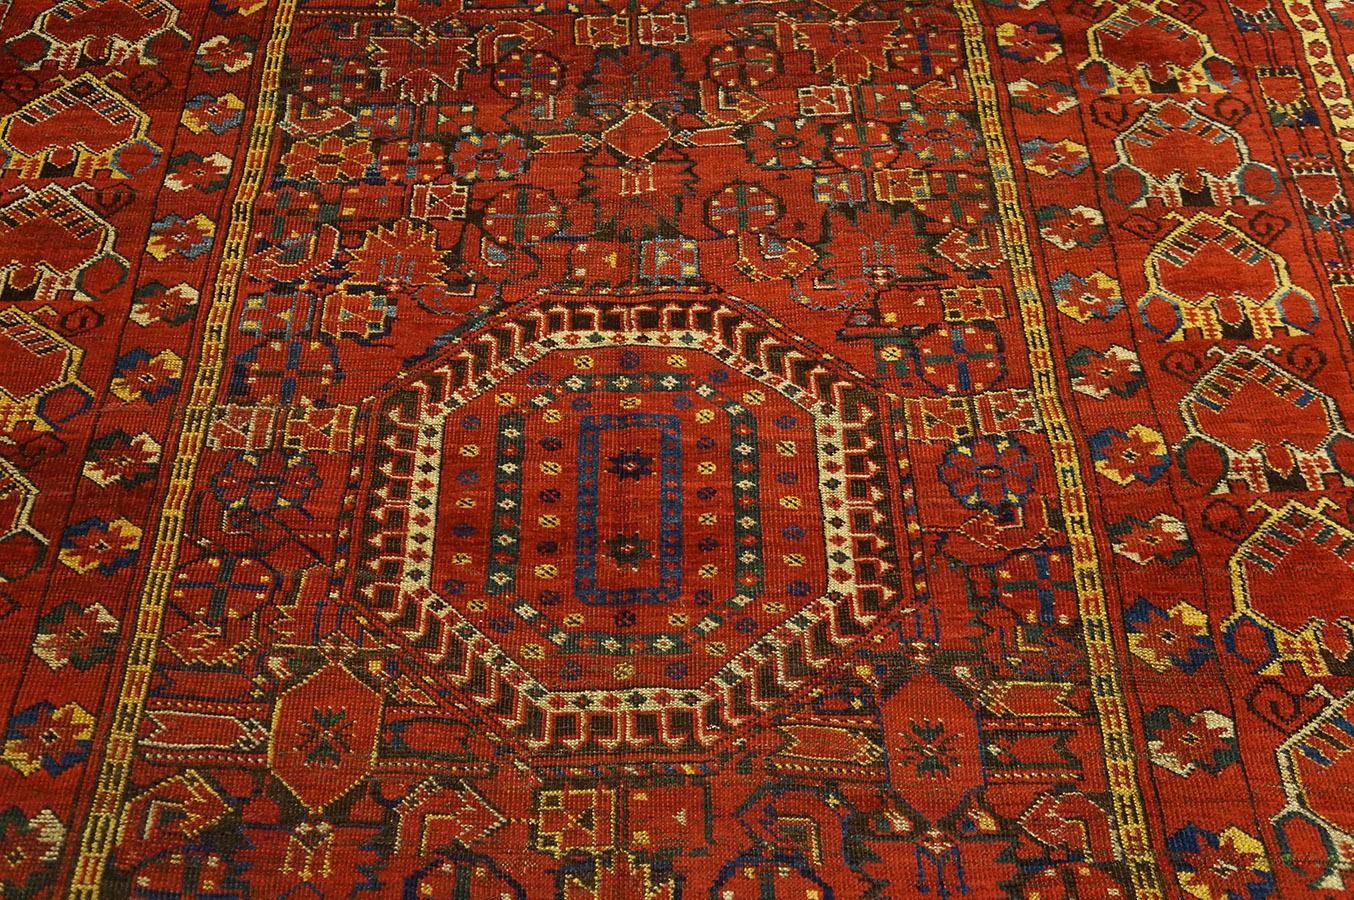 Late 19th Century 19th Century Central Asian Ersari-Beshir Gallery Carpet (6'6